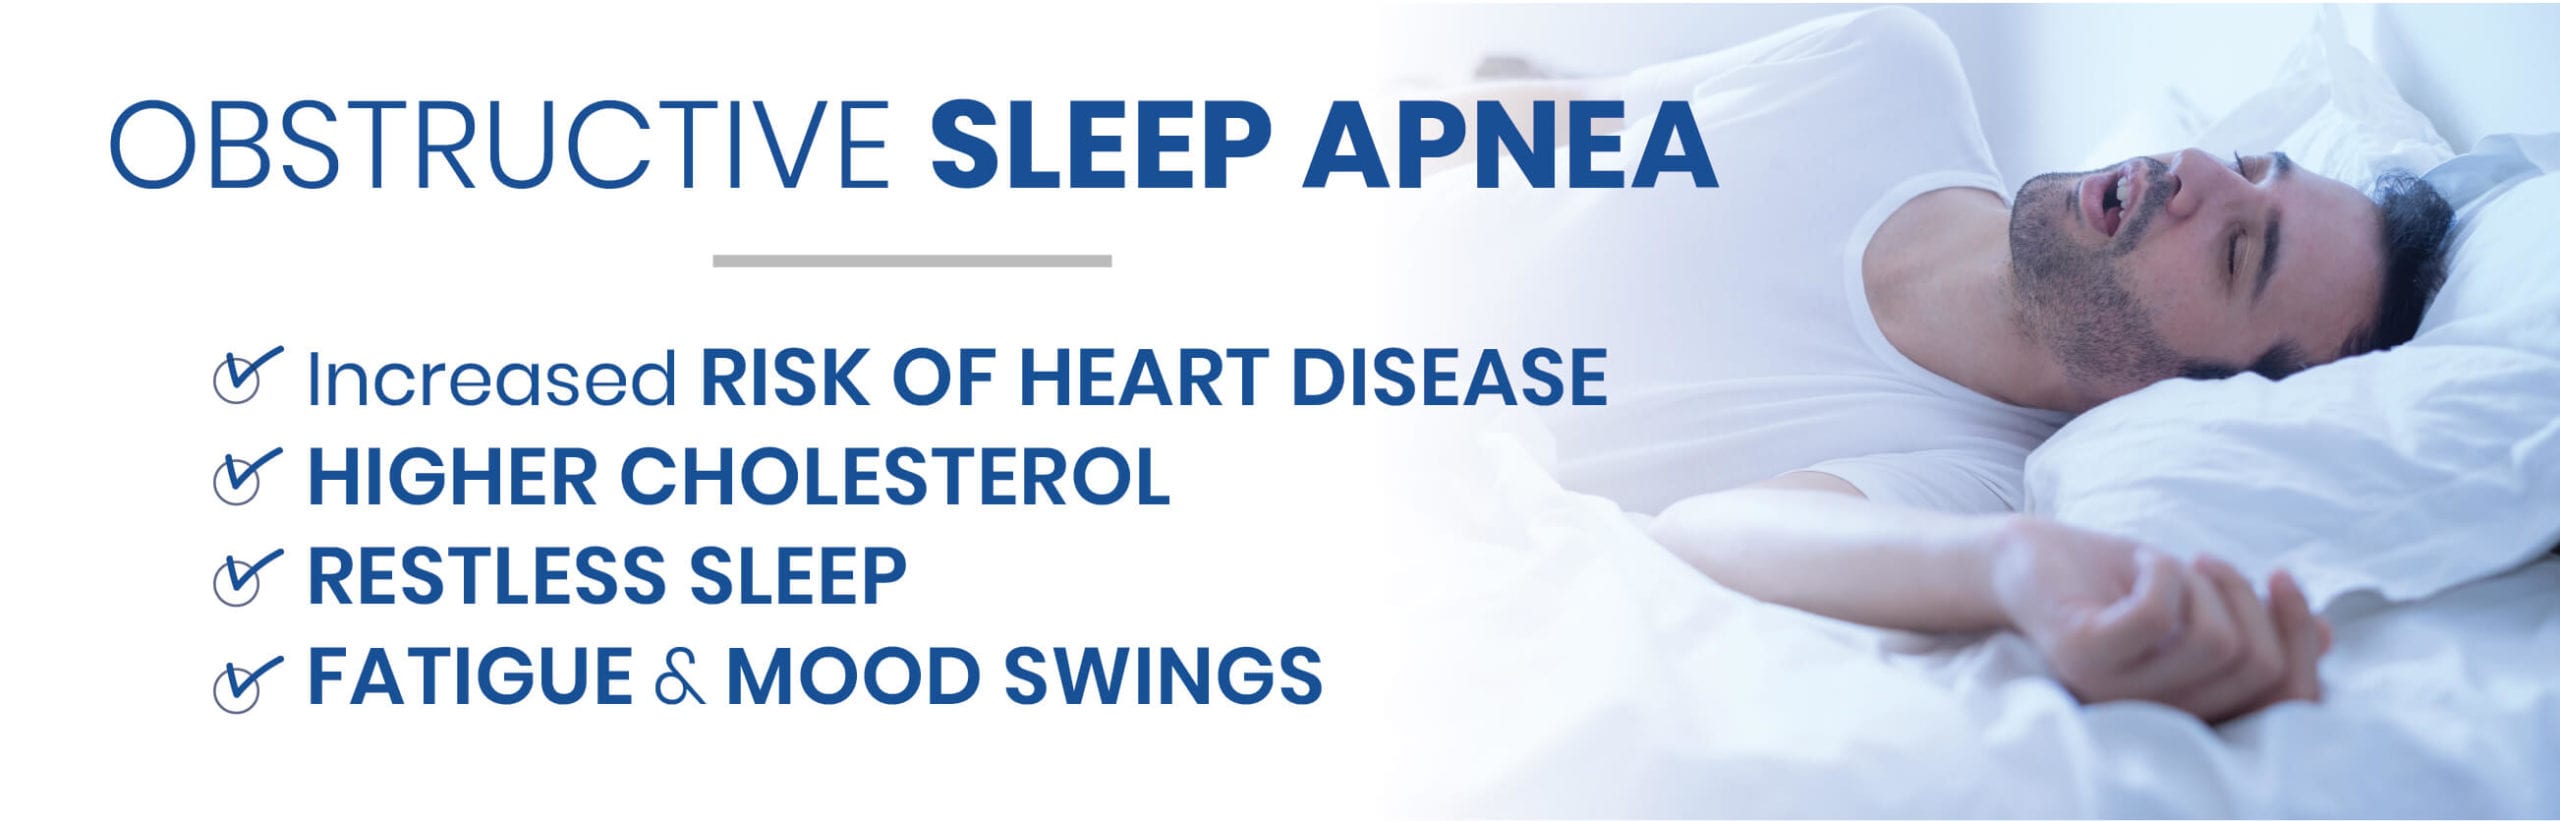 Obstructive-Sleep-Apnea-Facts